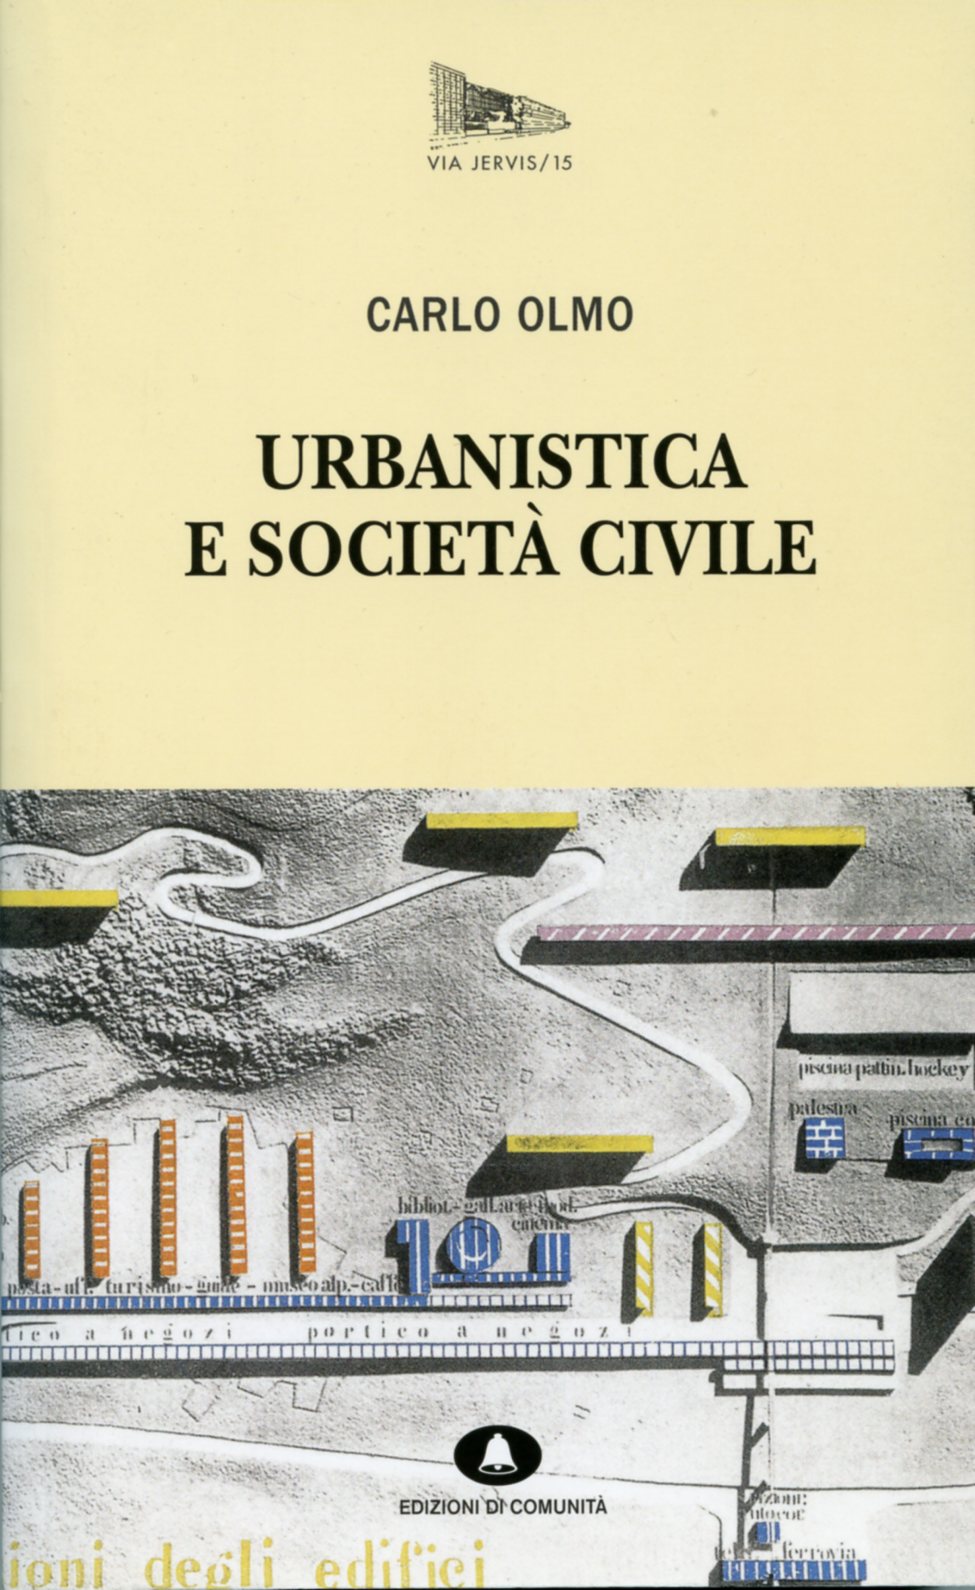 Urban planning and civil society